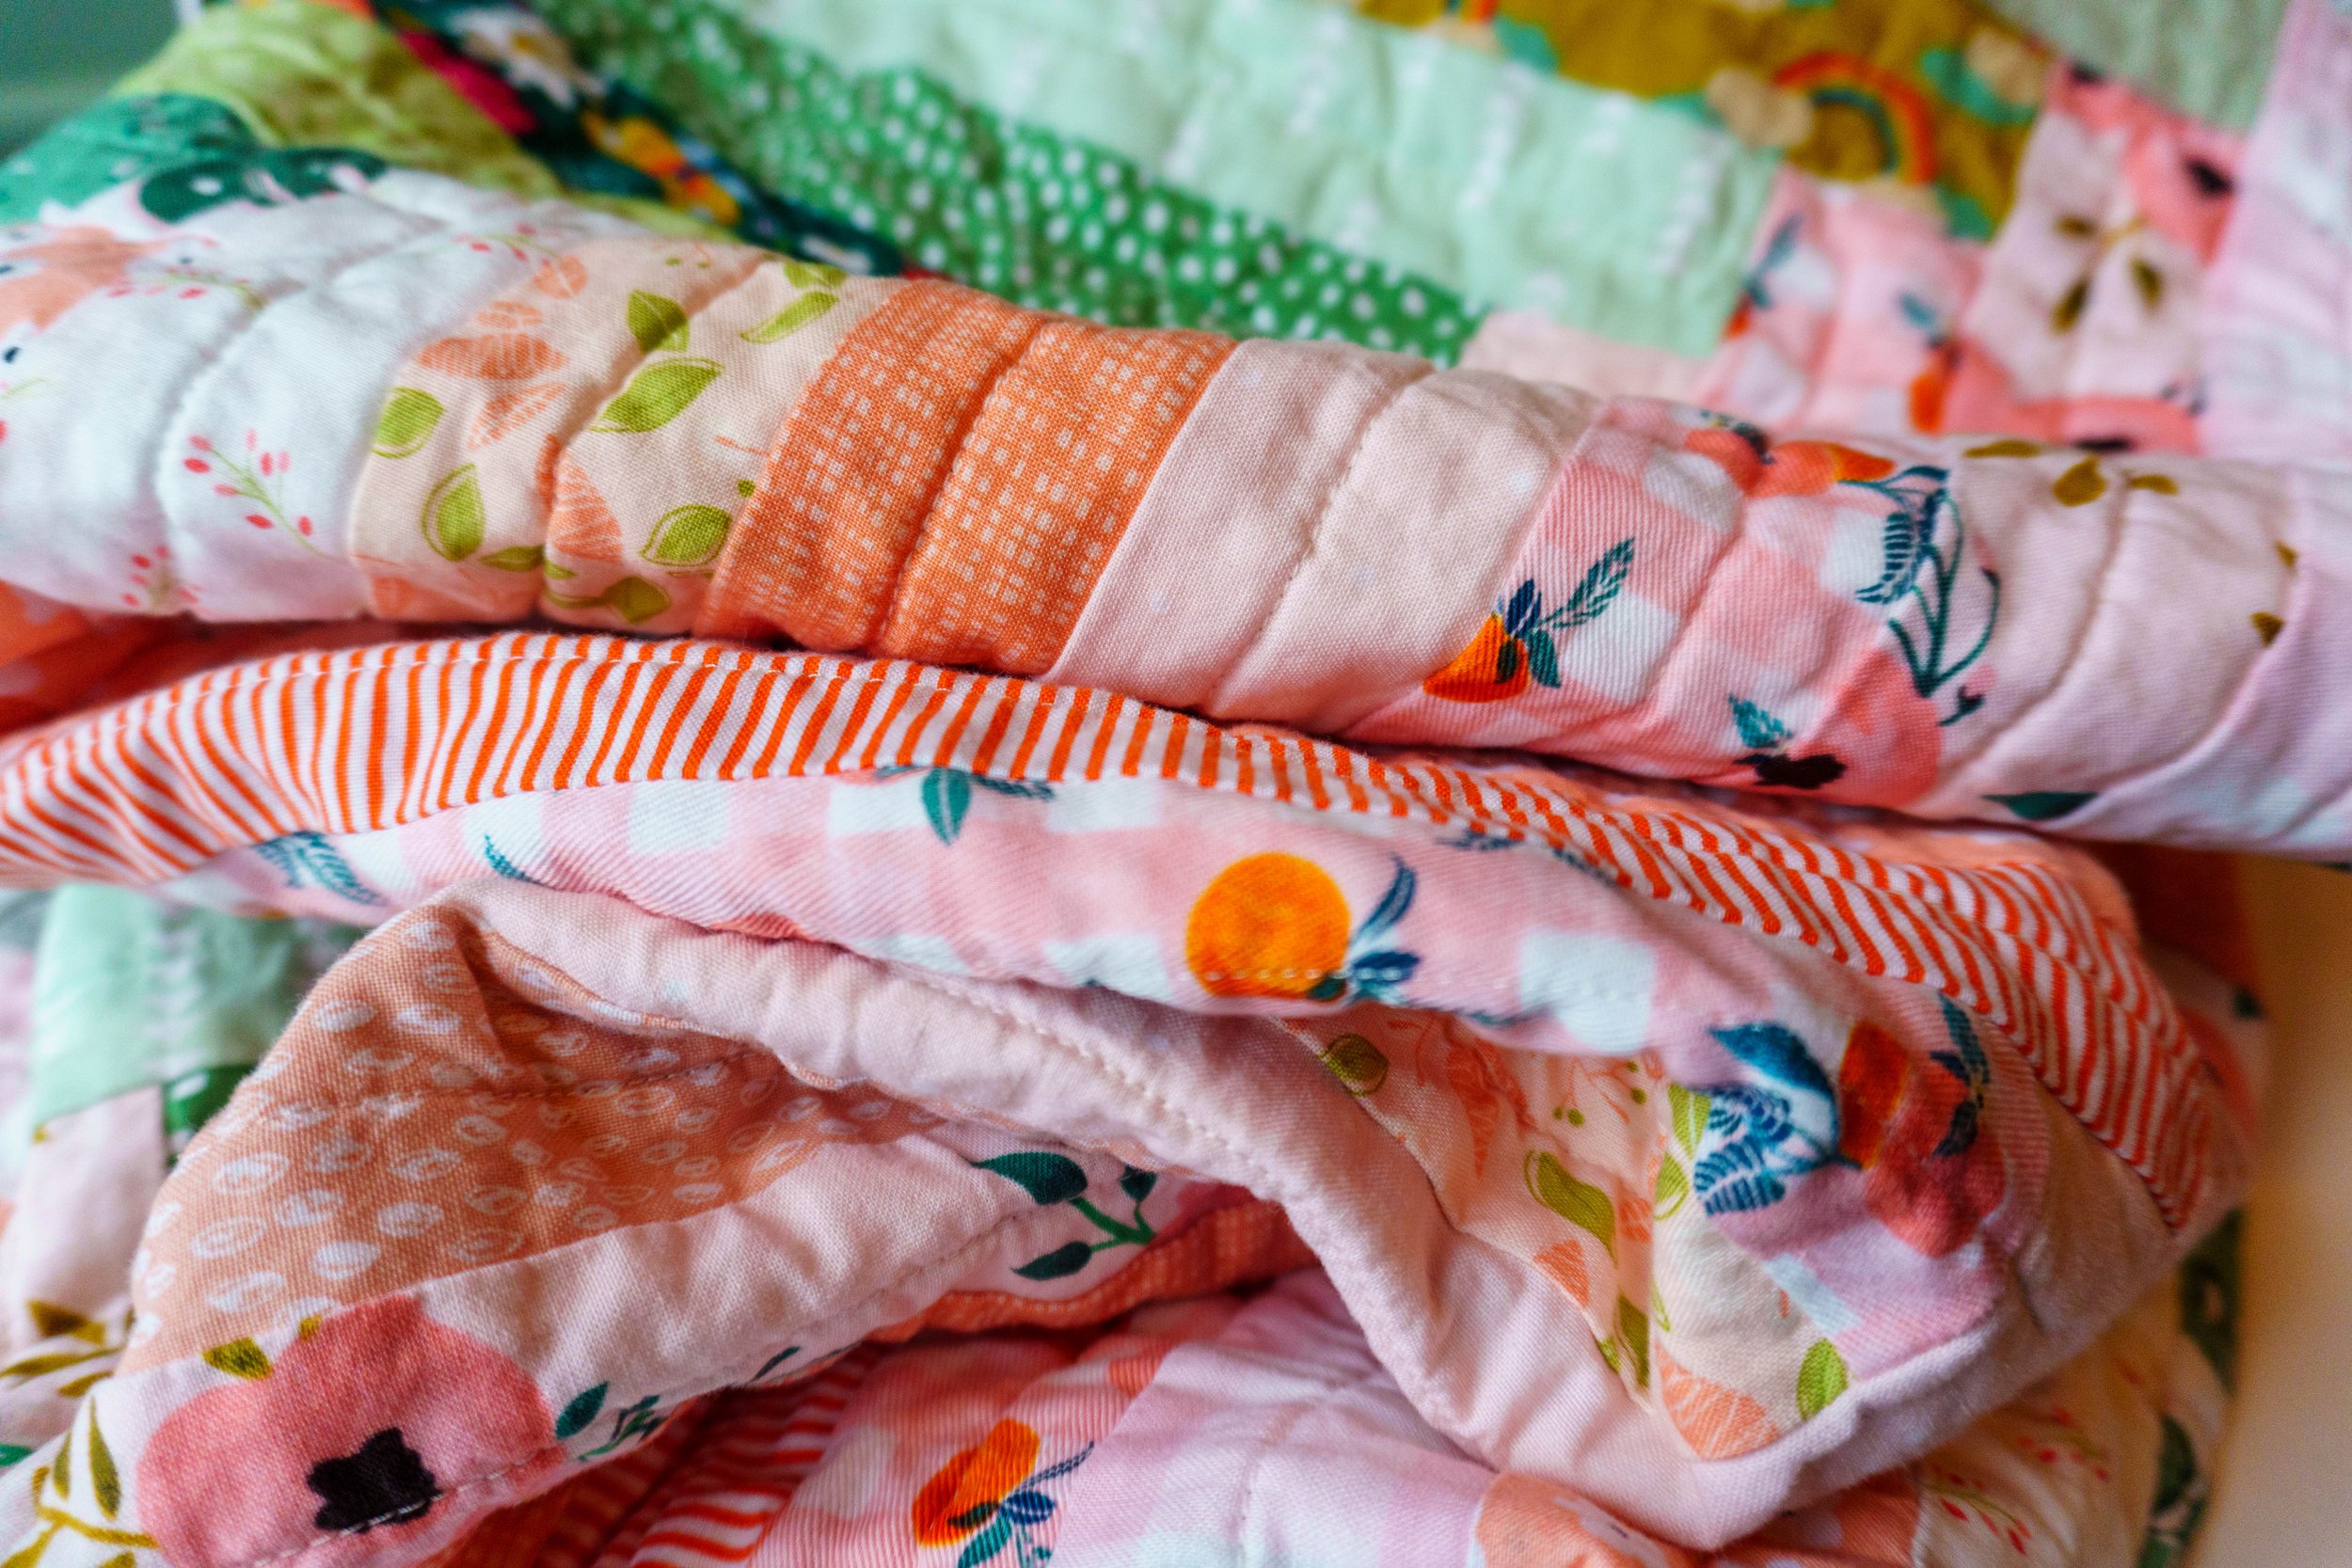 The Easiest Quilt Binding Tutorial — Pin Cut Sew Studio